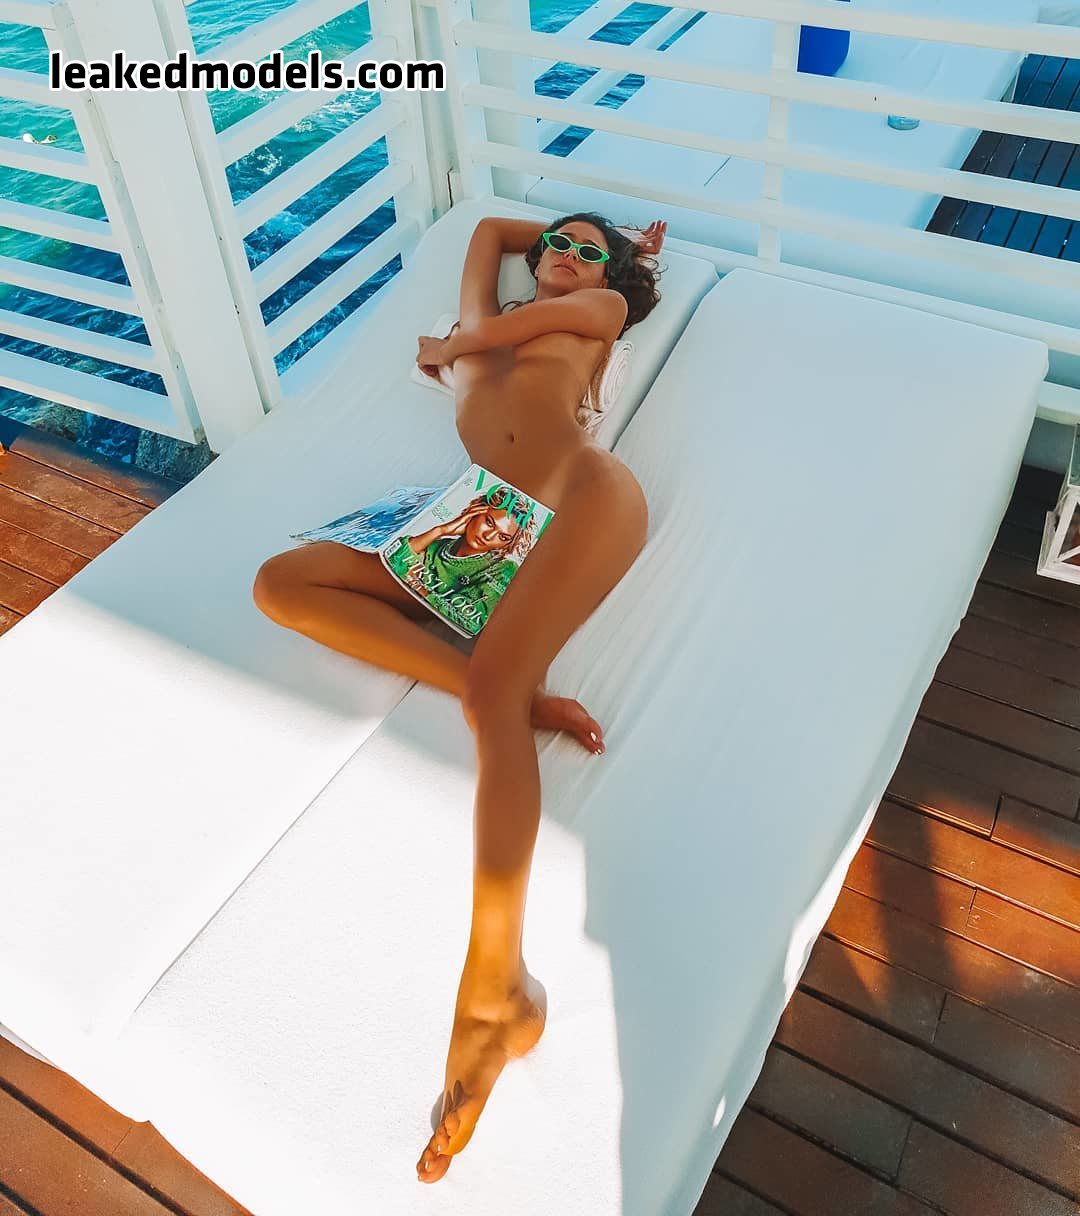 romi nest leaked nude leakedmodels.com 0009 - Romi Nest Instagram Nude Leaks (15 Photos)